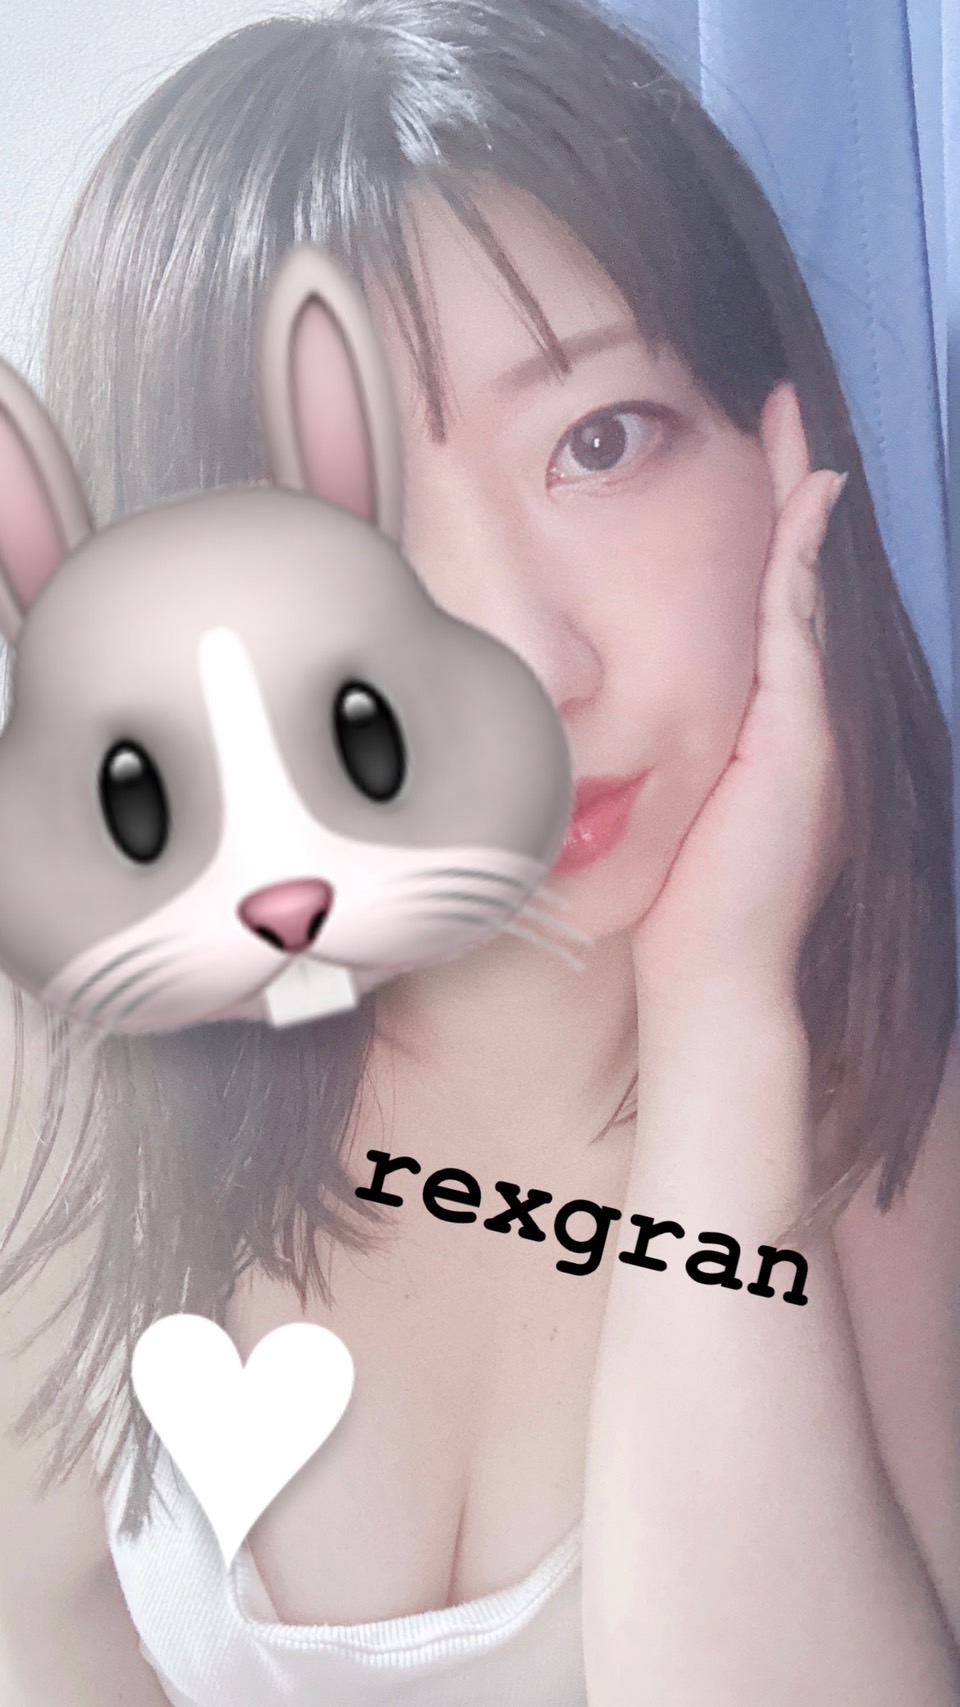 rexgran-レクスグラン-|もも